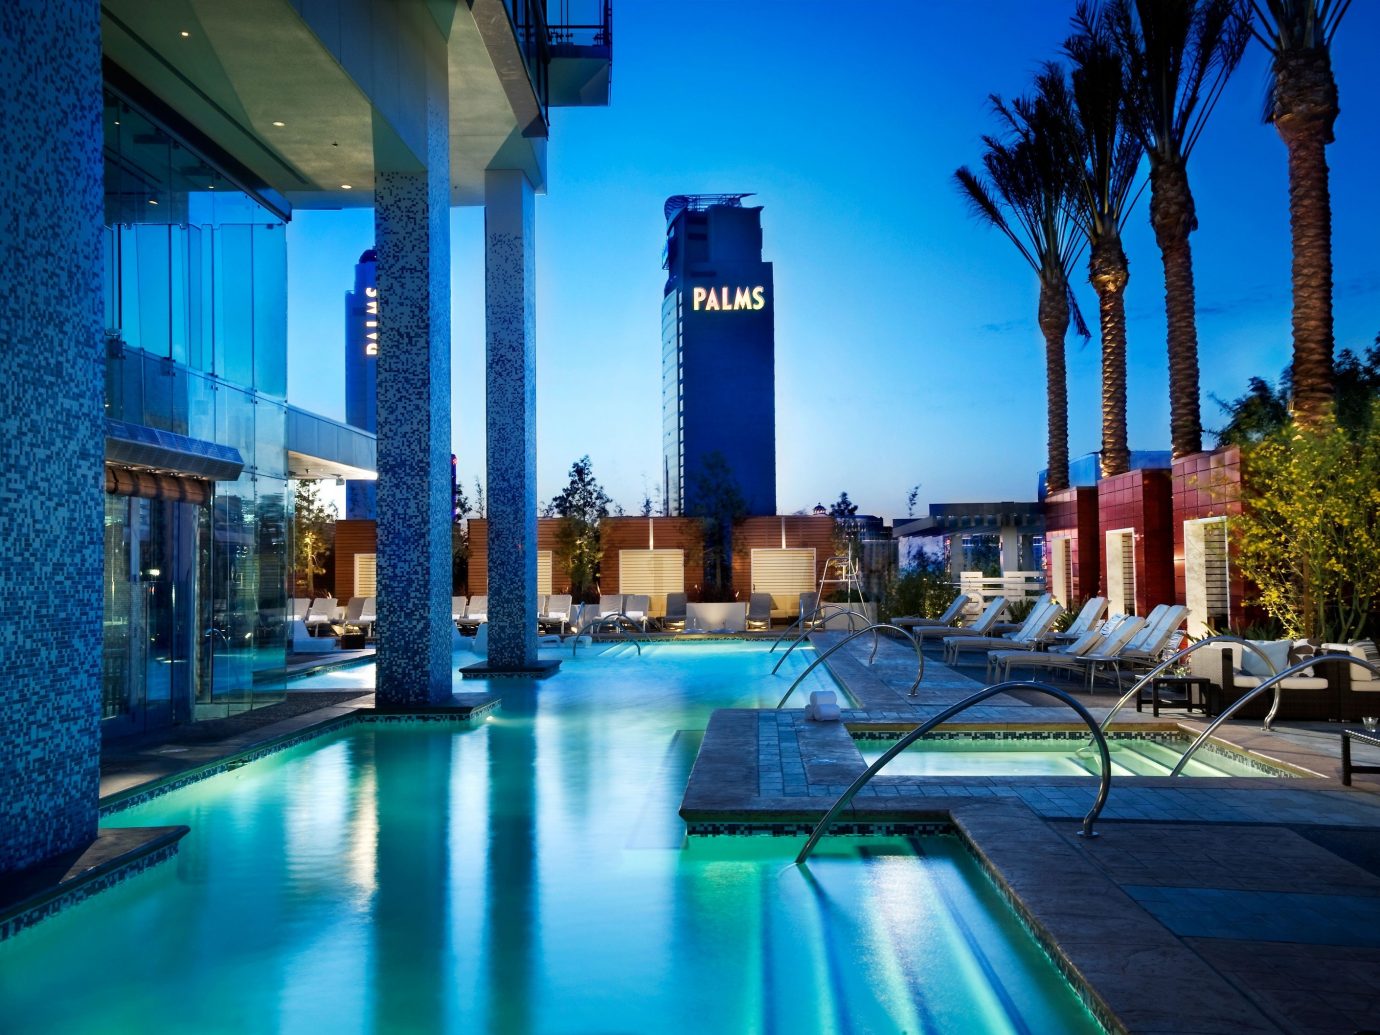 Hotels building sky outdoor swimming pool leisure Resort Pool condominium estate blue plaza